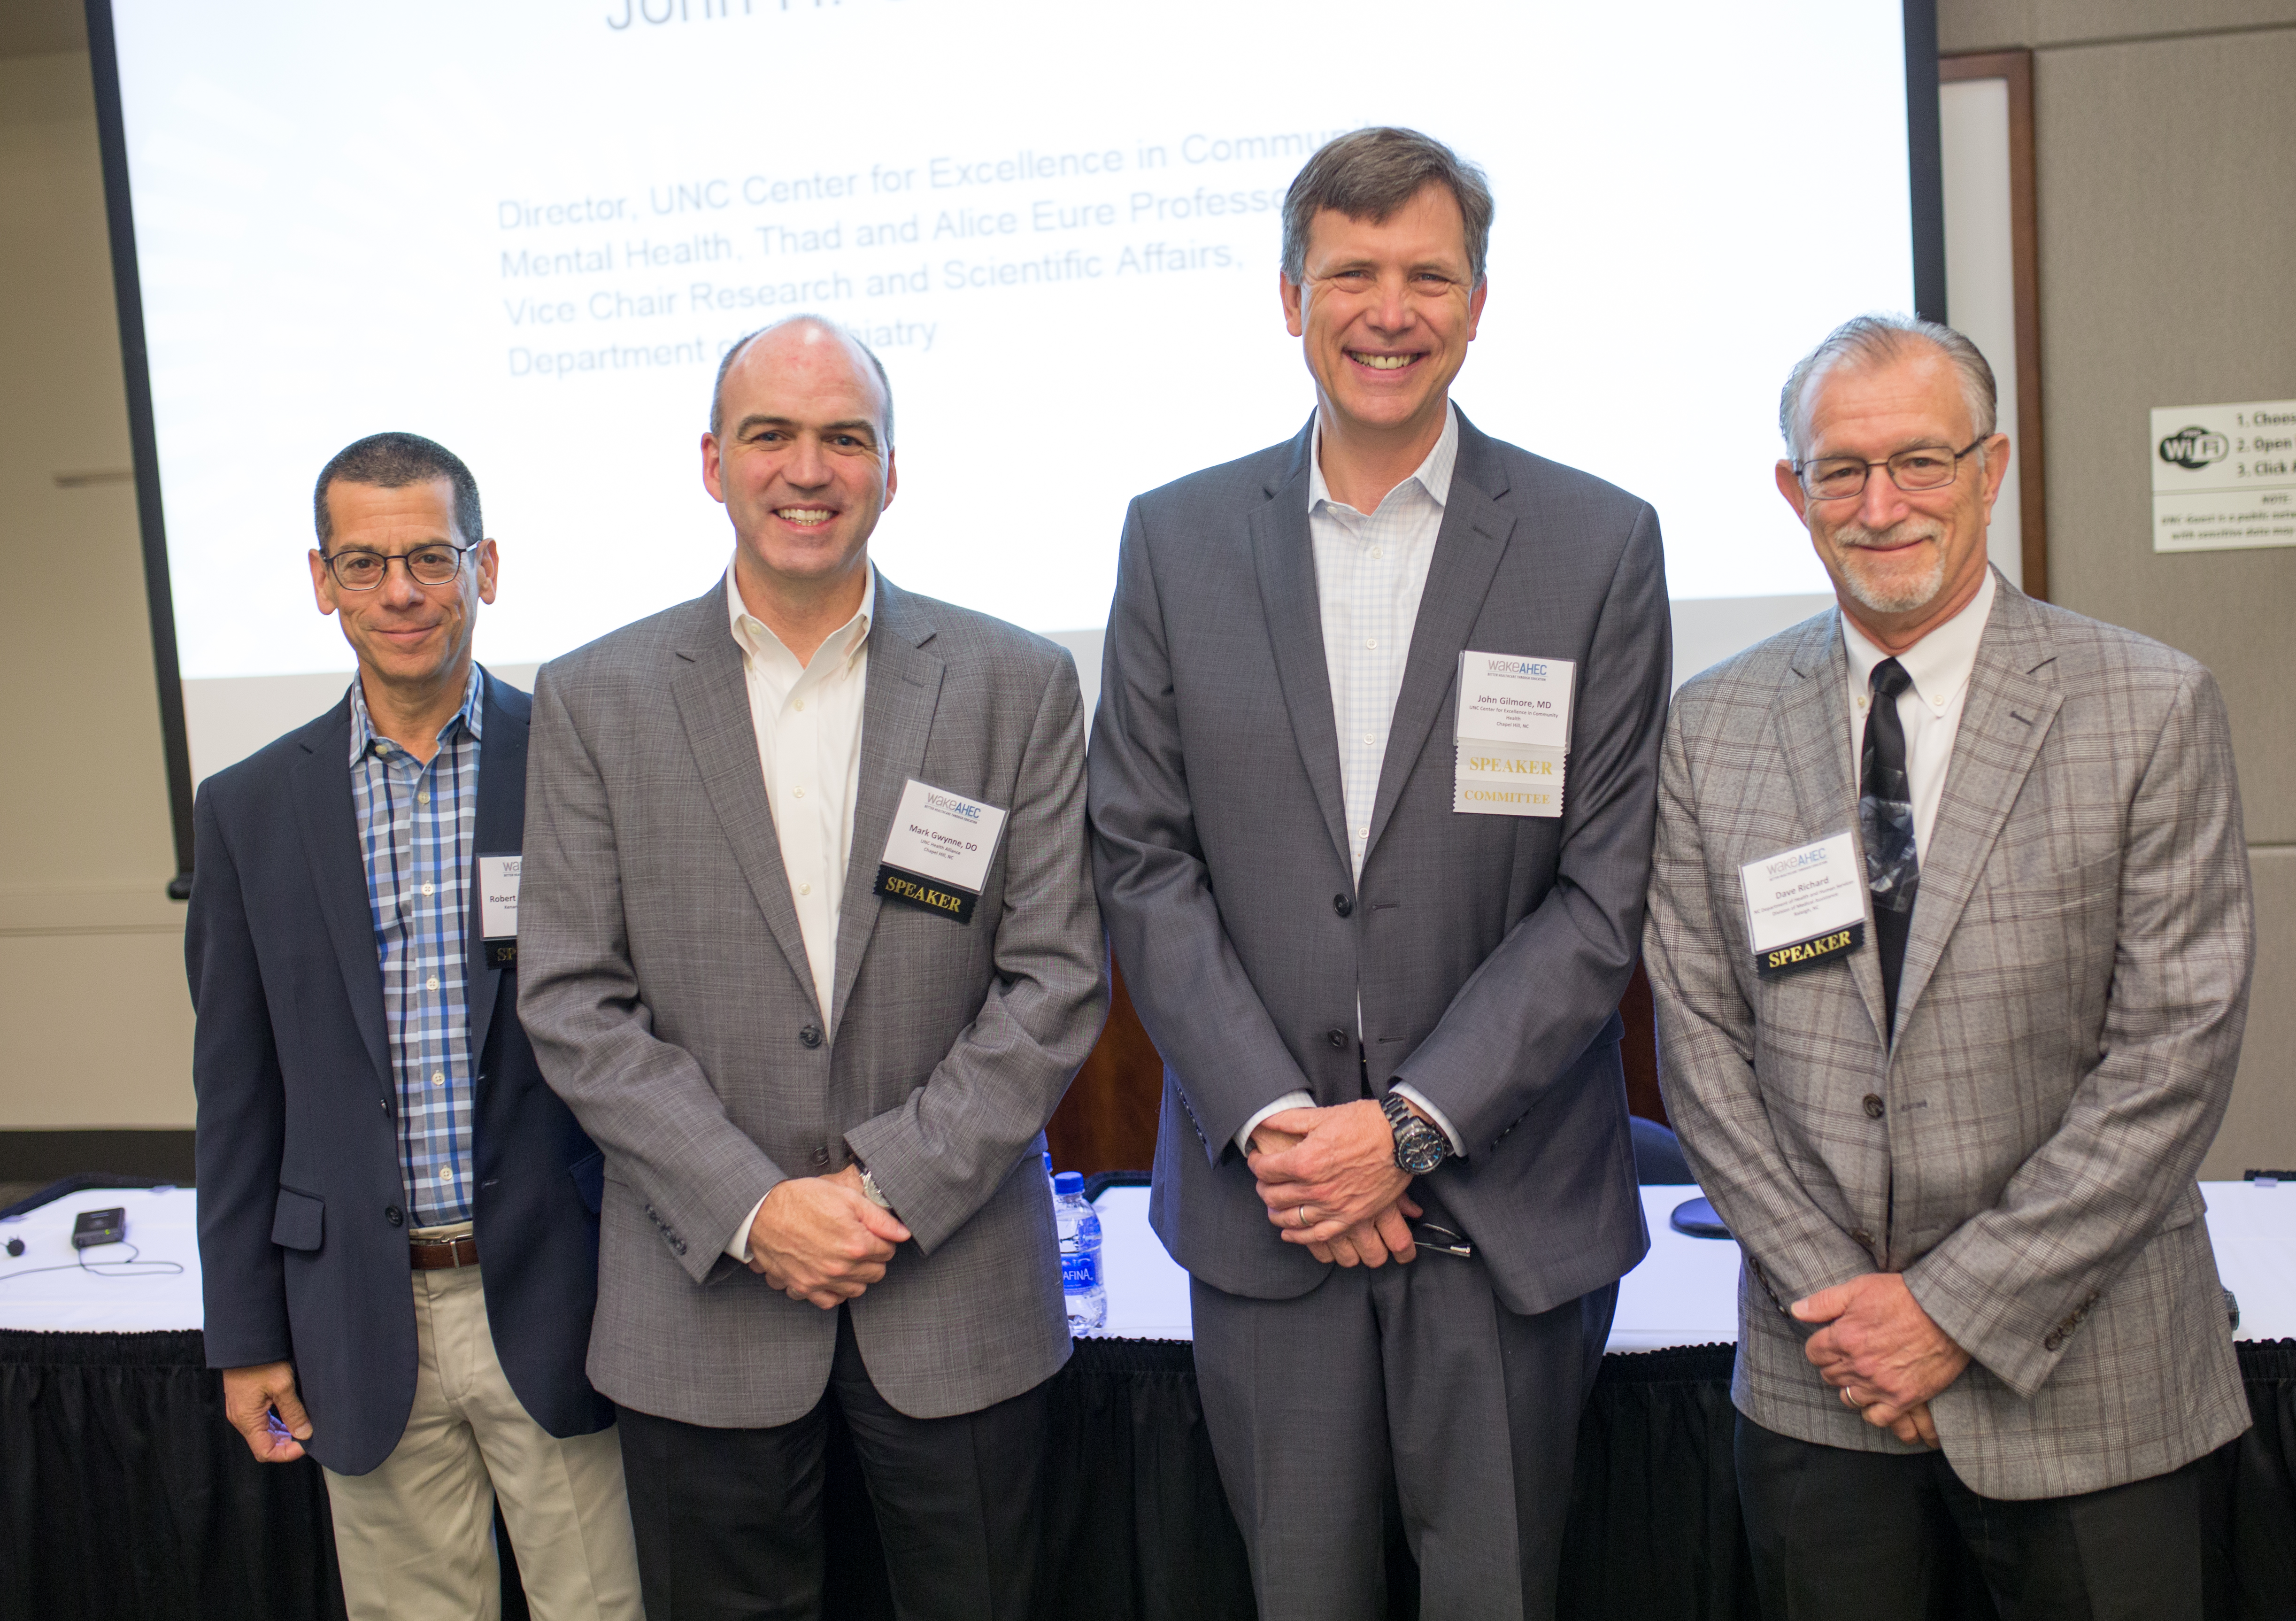 Robert Goldberg, MBA  Mark Gwynne, DO John Gilmore, MD. and Dave Richard